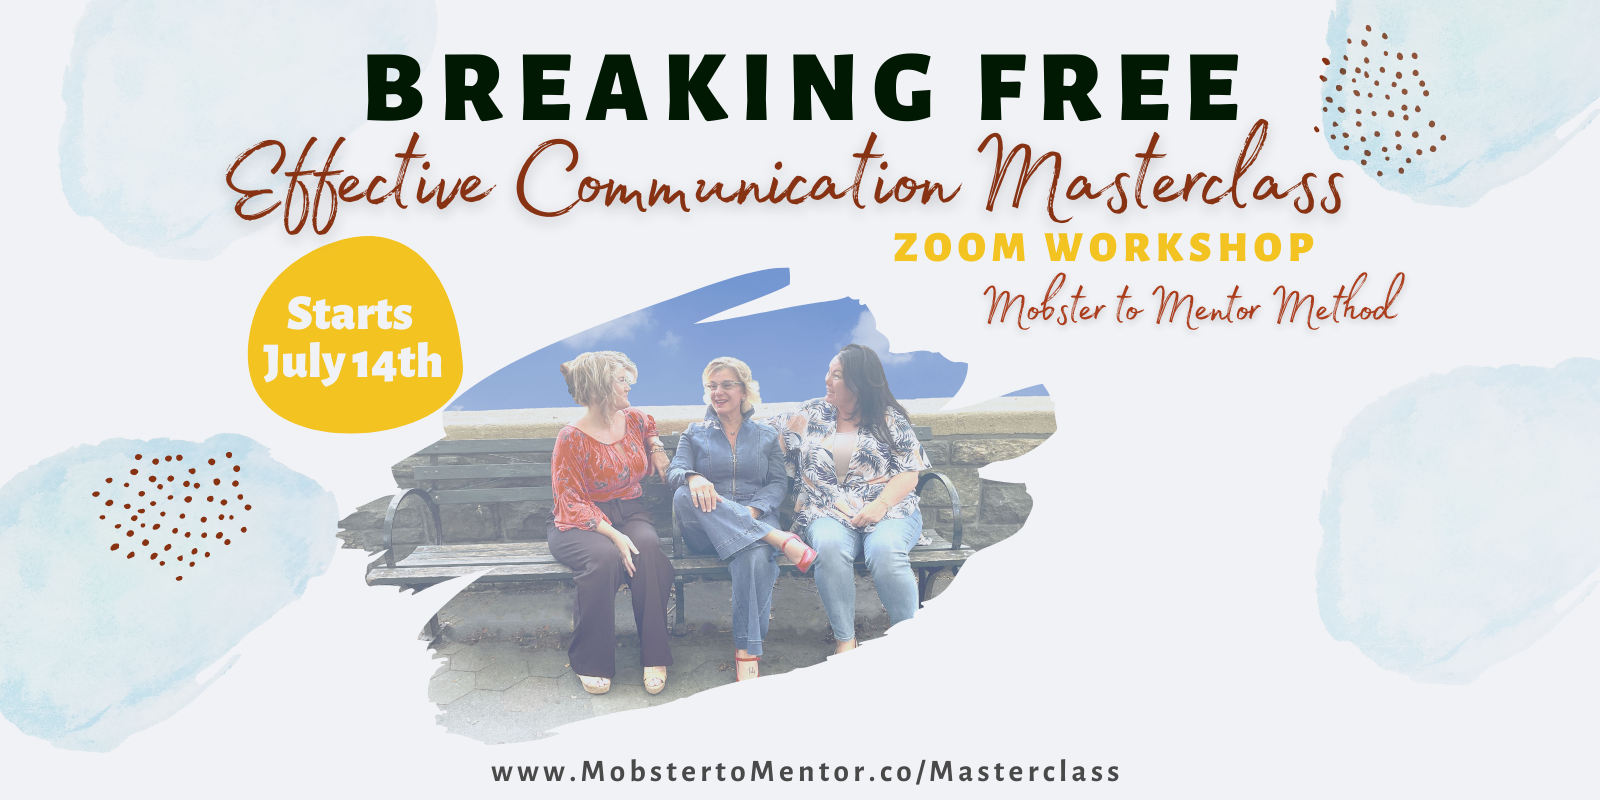 Effective Communication Masterclass Zoom Workshop